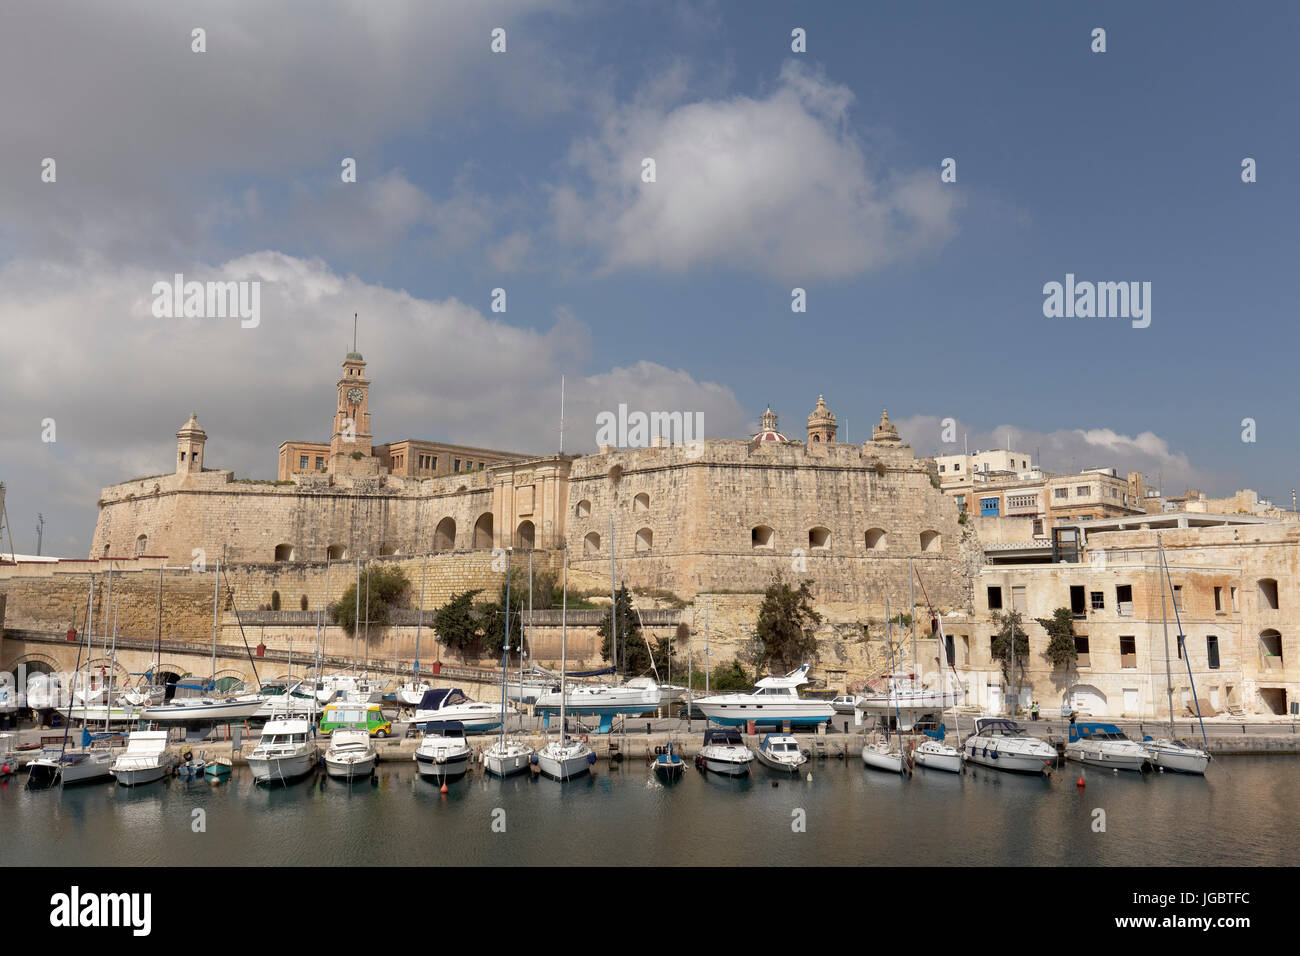 Fort San Michel at Dockyard Creek, Senglea, The Three Cities, Malta Stock Photo